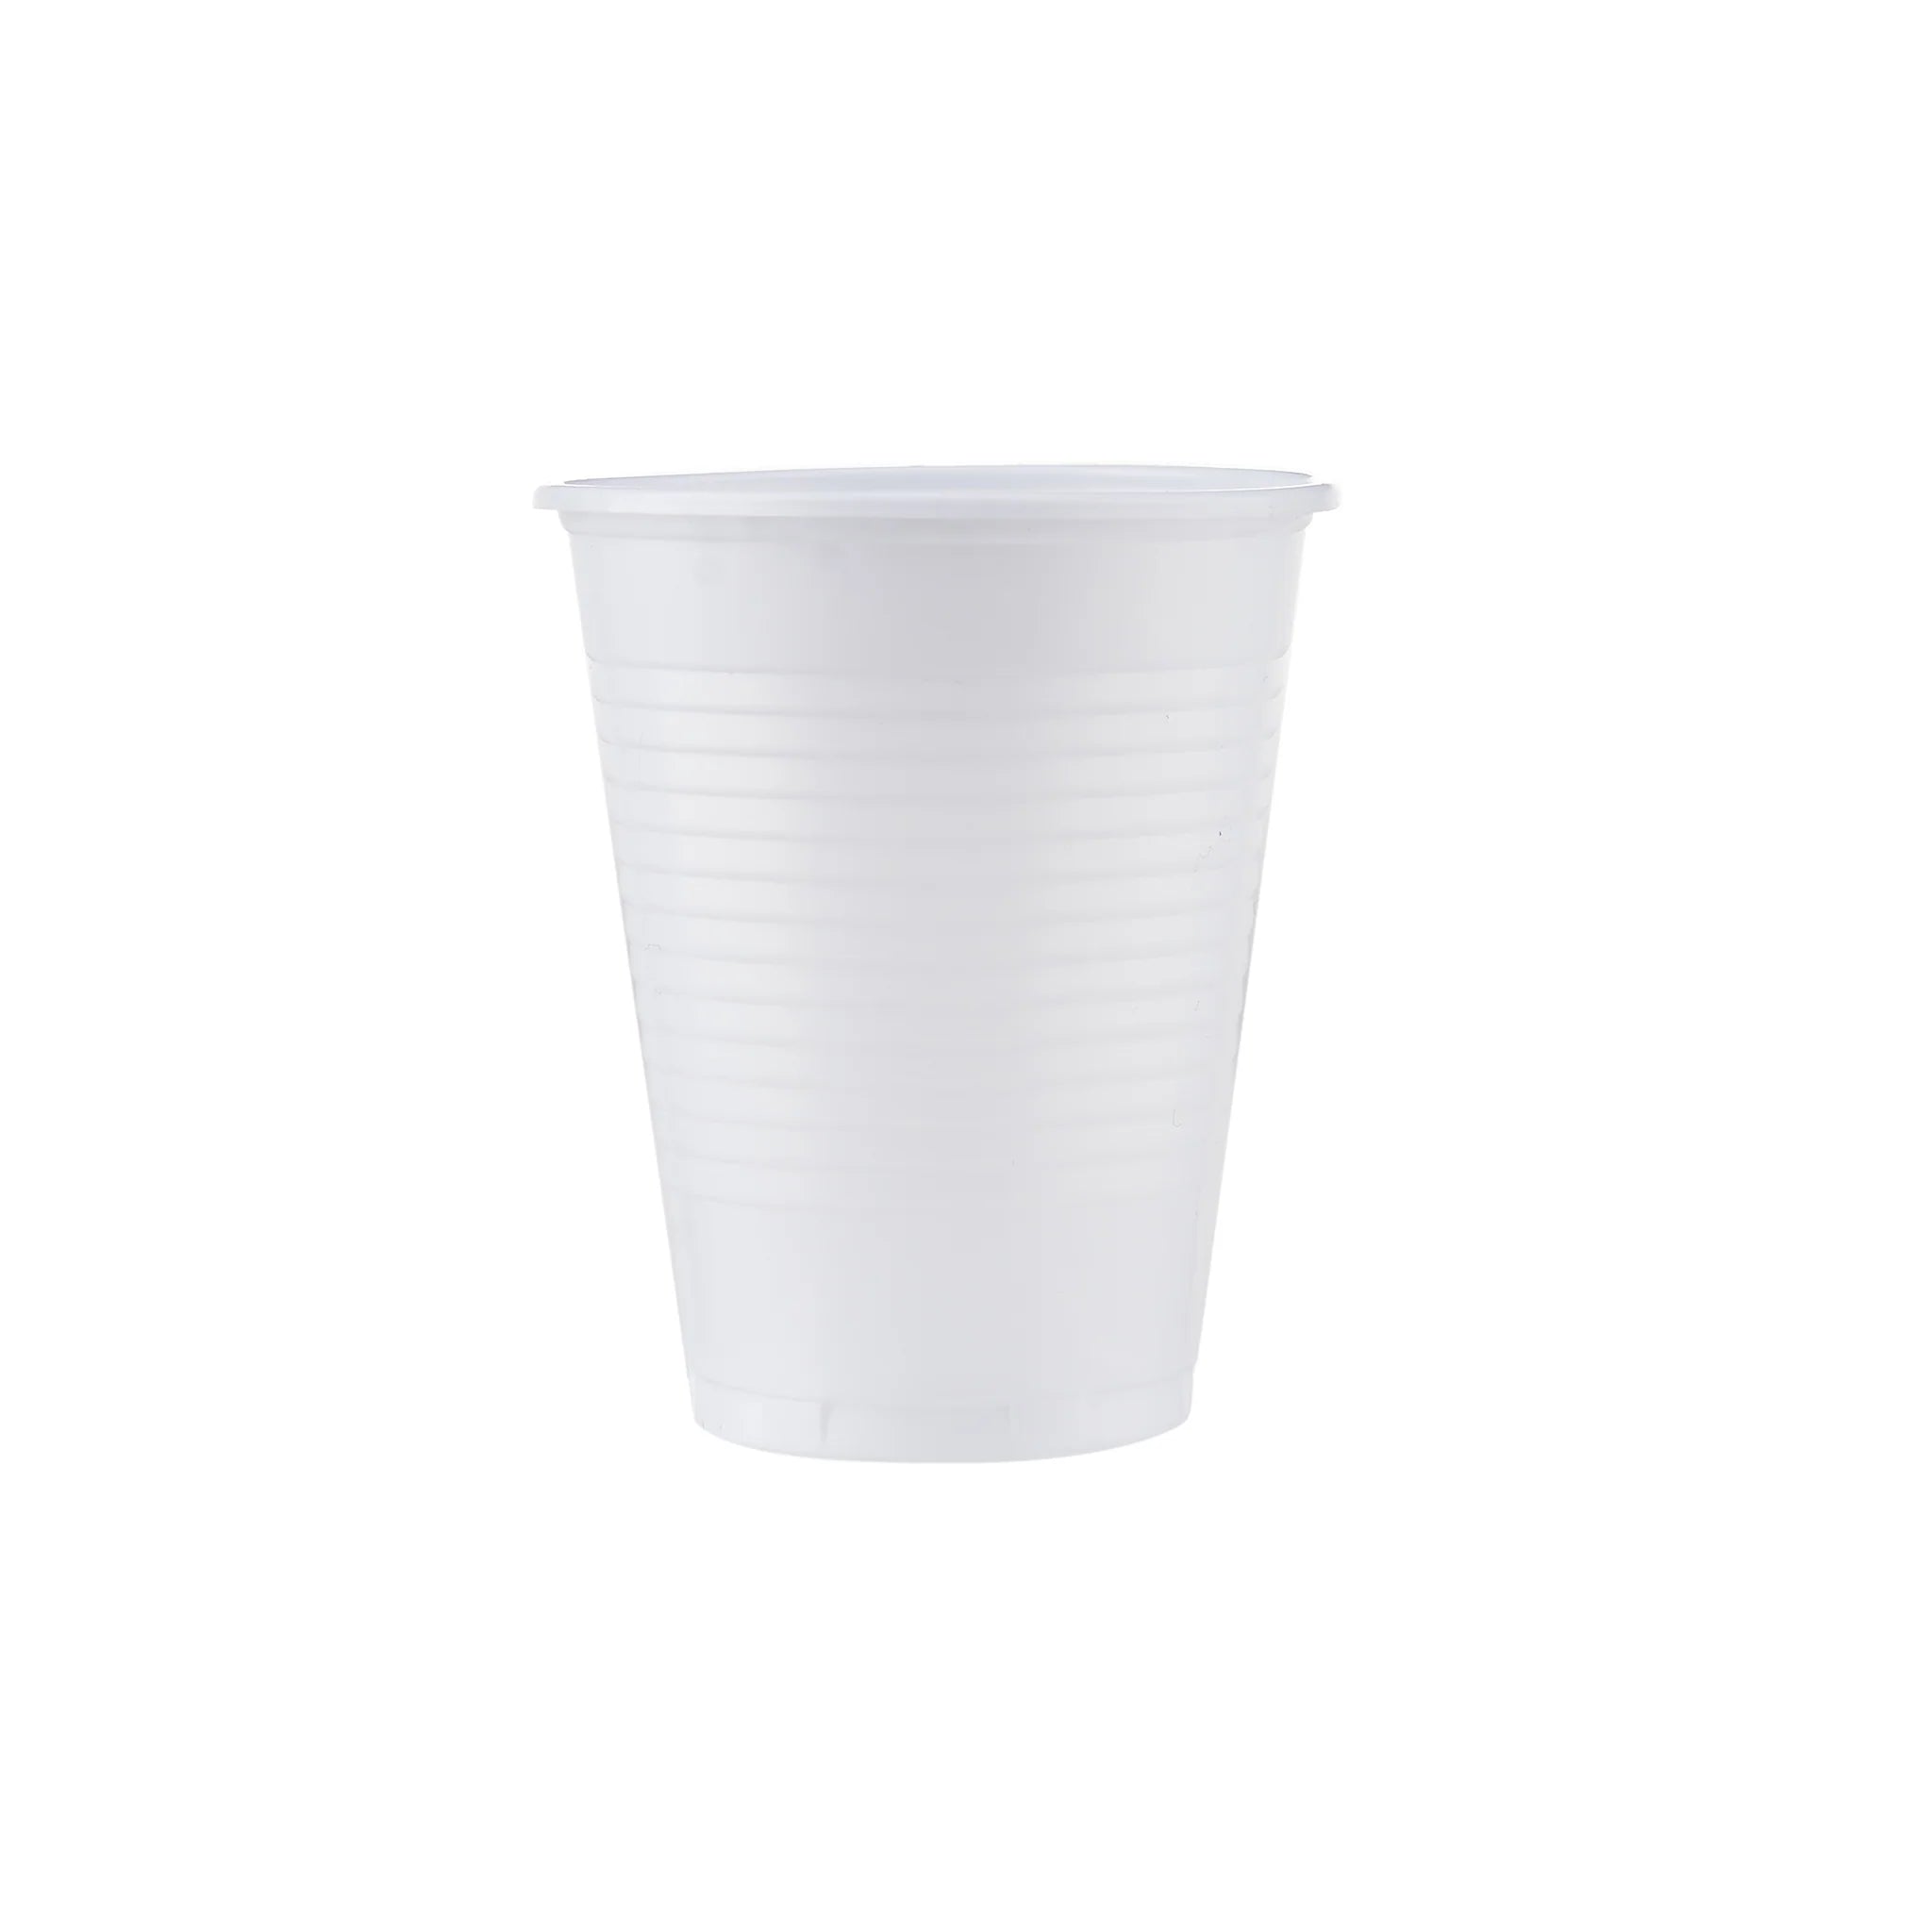 2000 Pieces White Plastic Cup